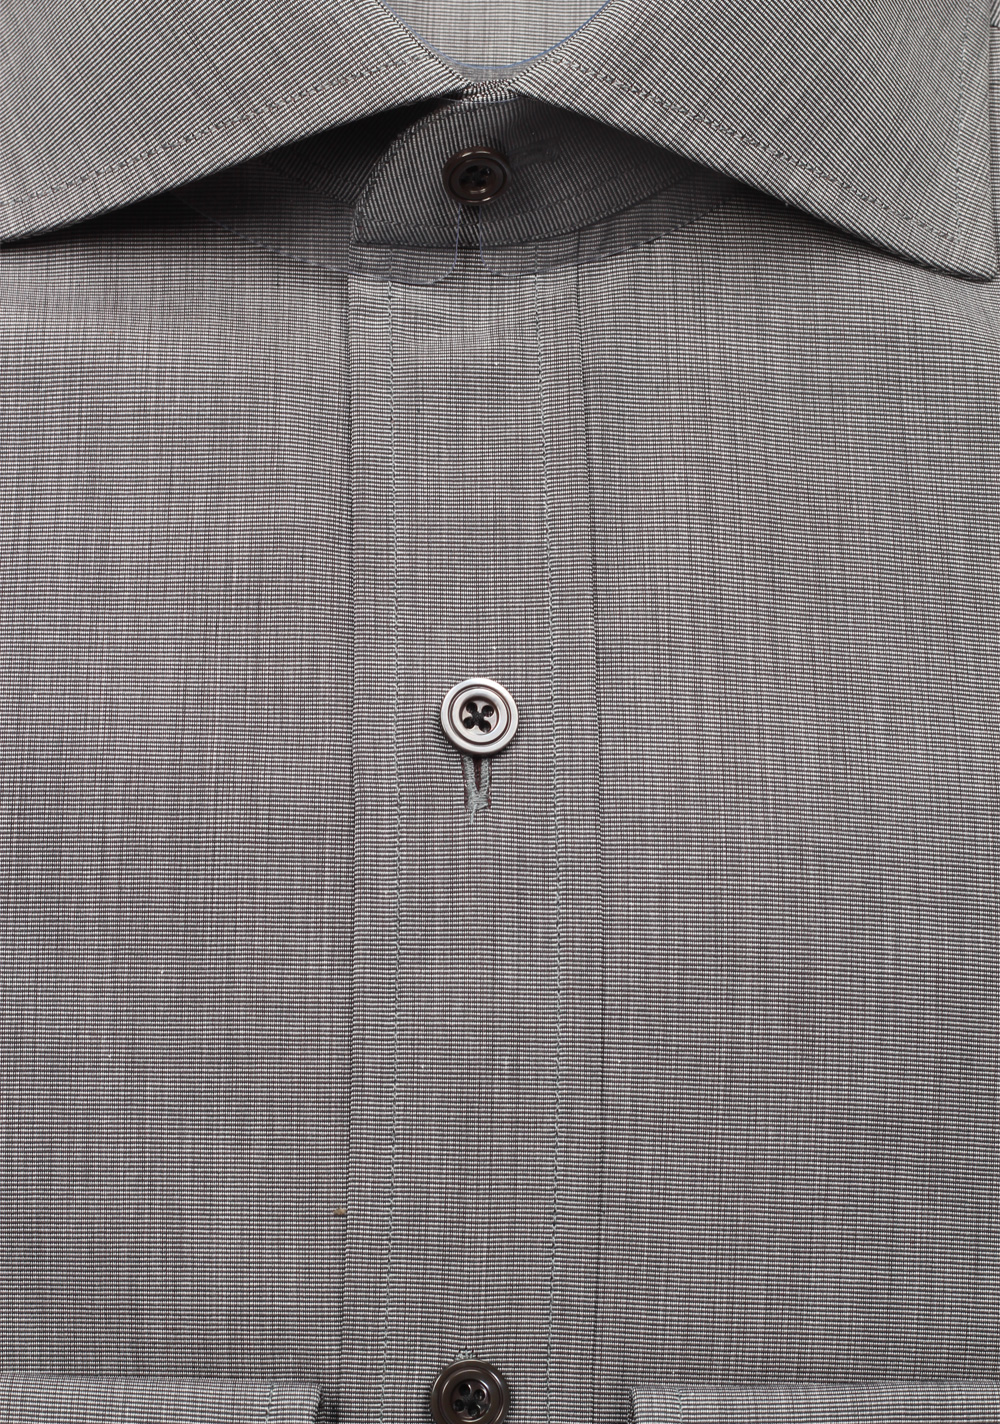 TOM FORD Solid Gray Dress Shirt Size 39 / 15,75 U.S. | Costume Limité